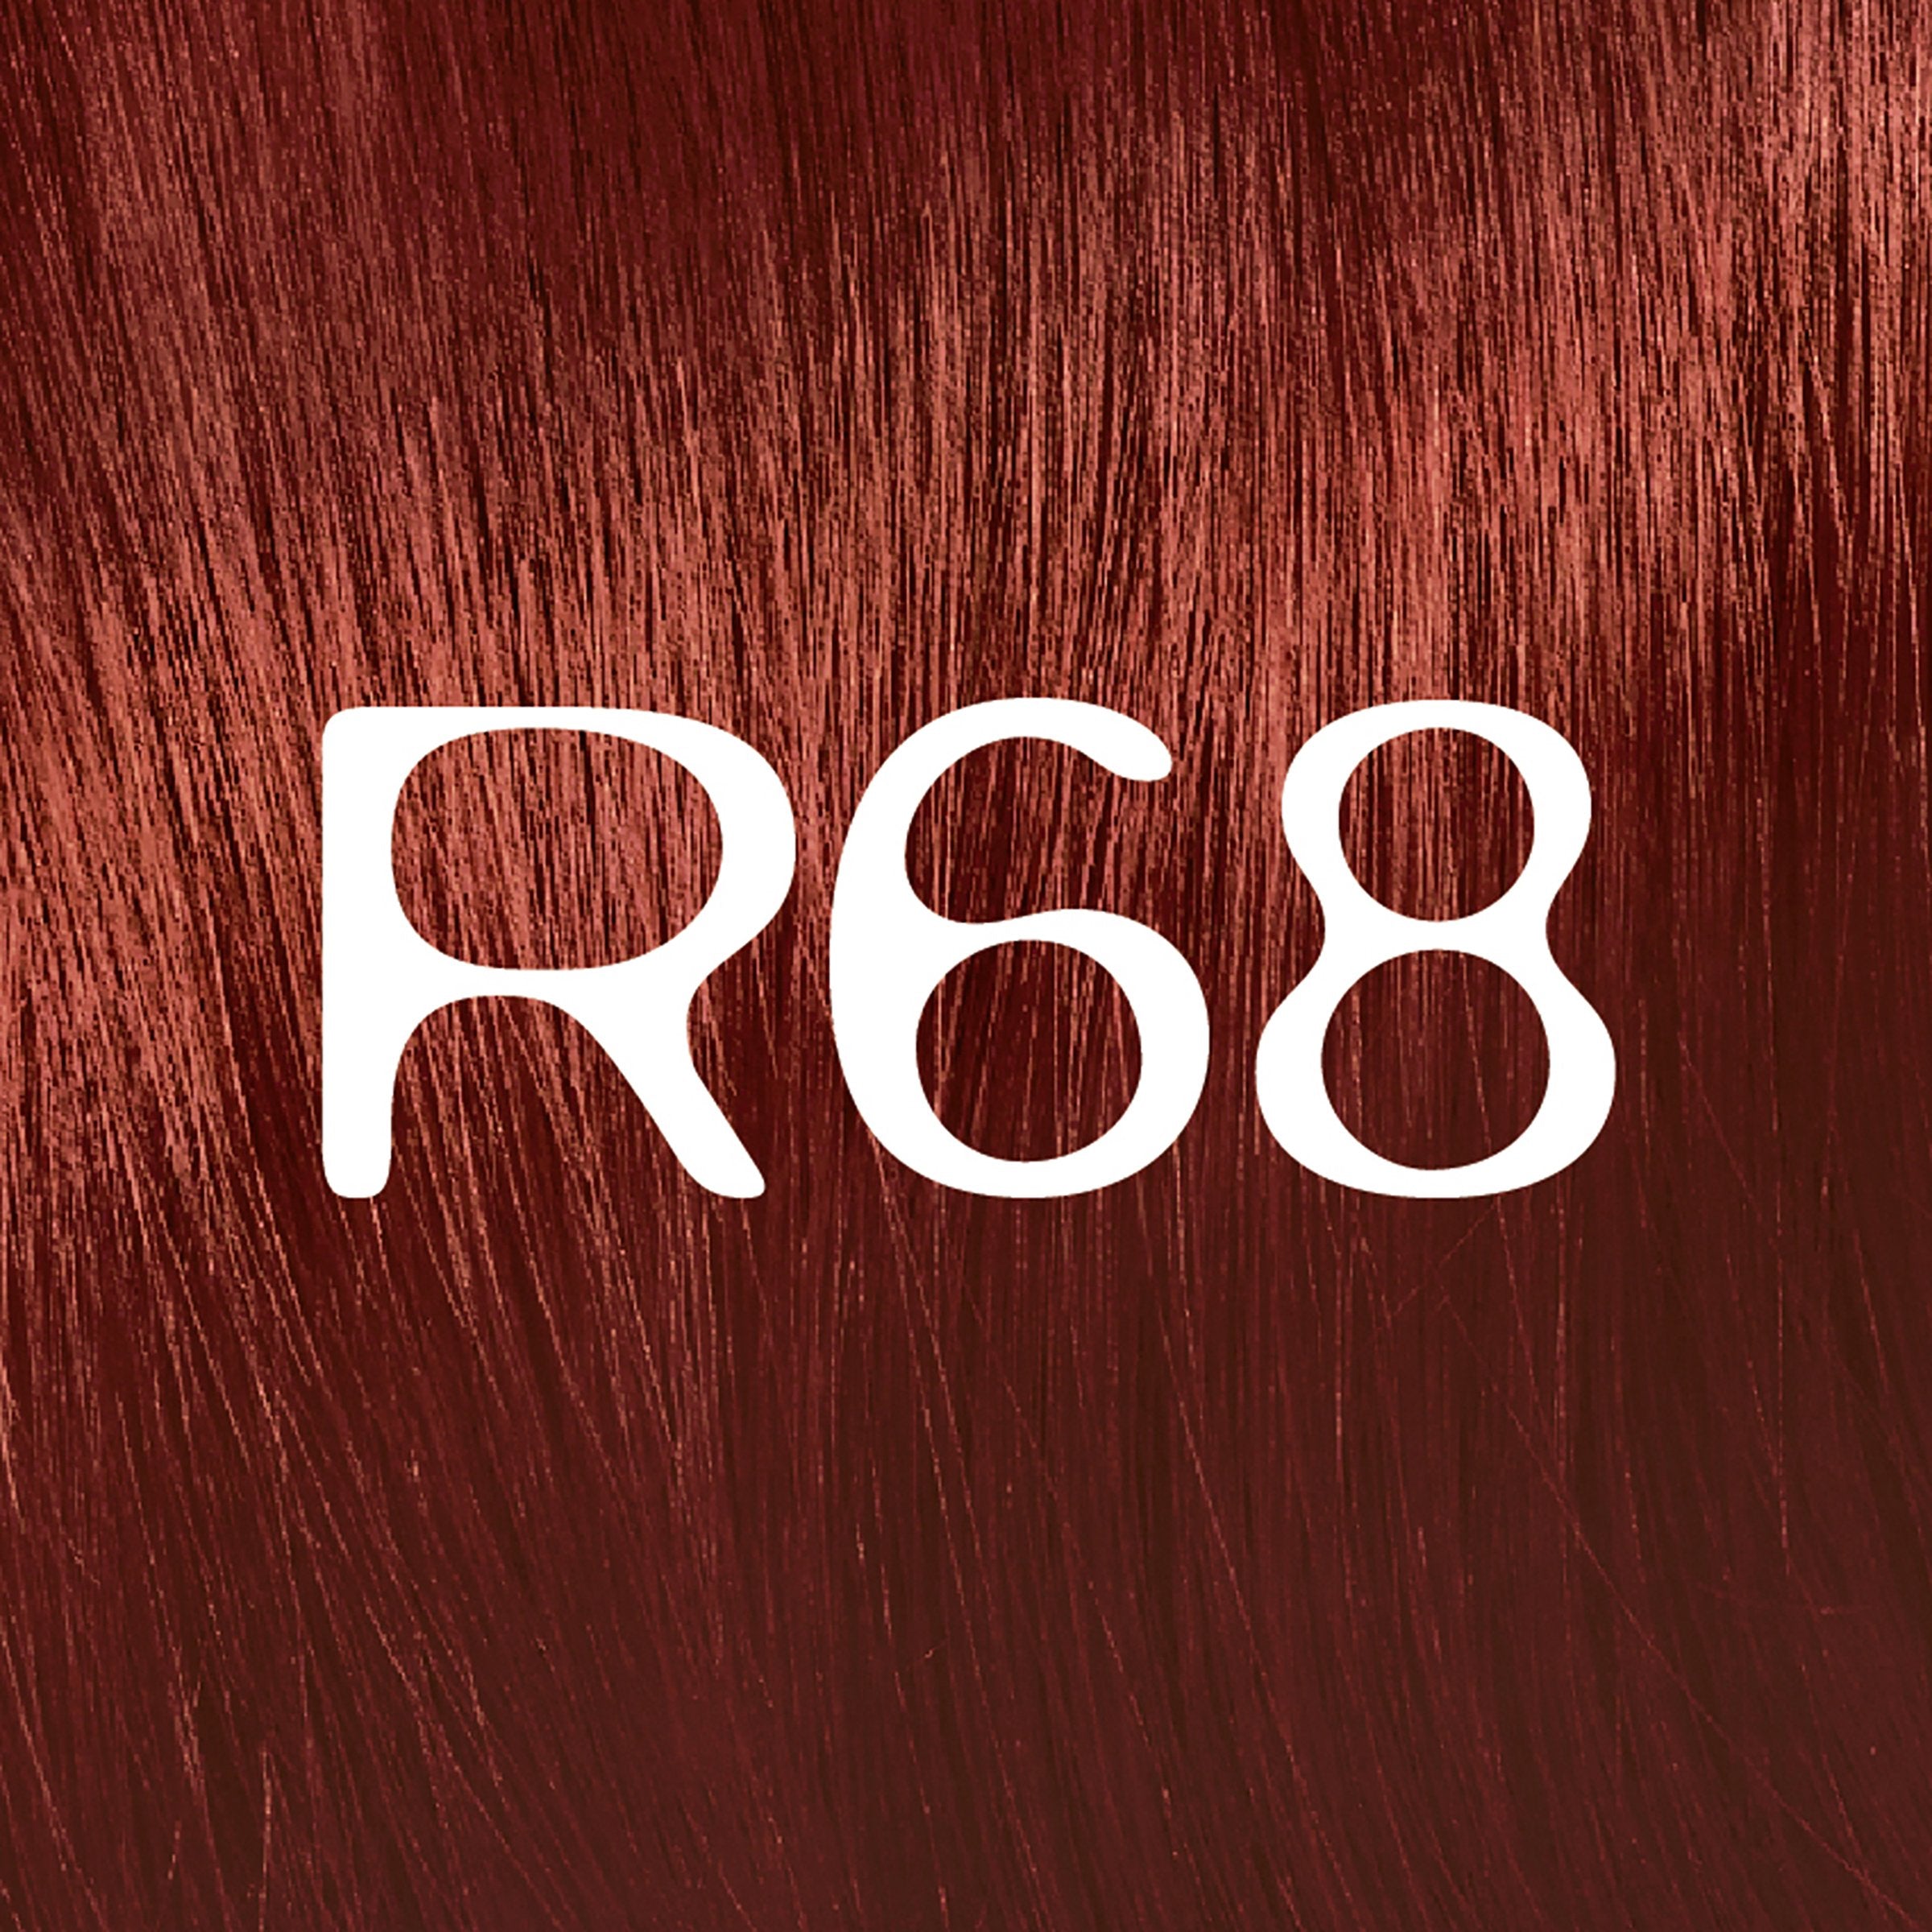 L'Oreal Paris Feria Multi-Faceted Shimmering Permanent Hair Color, R68 Ruby Rush (Rich Auburn True Red), 1 kit-CaribOnline